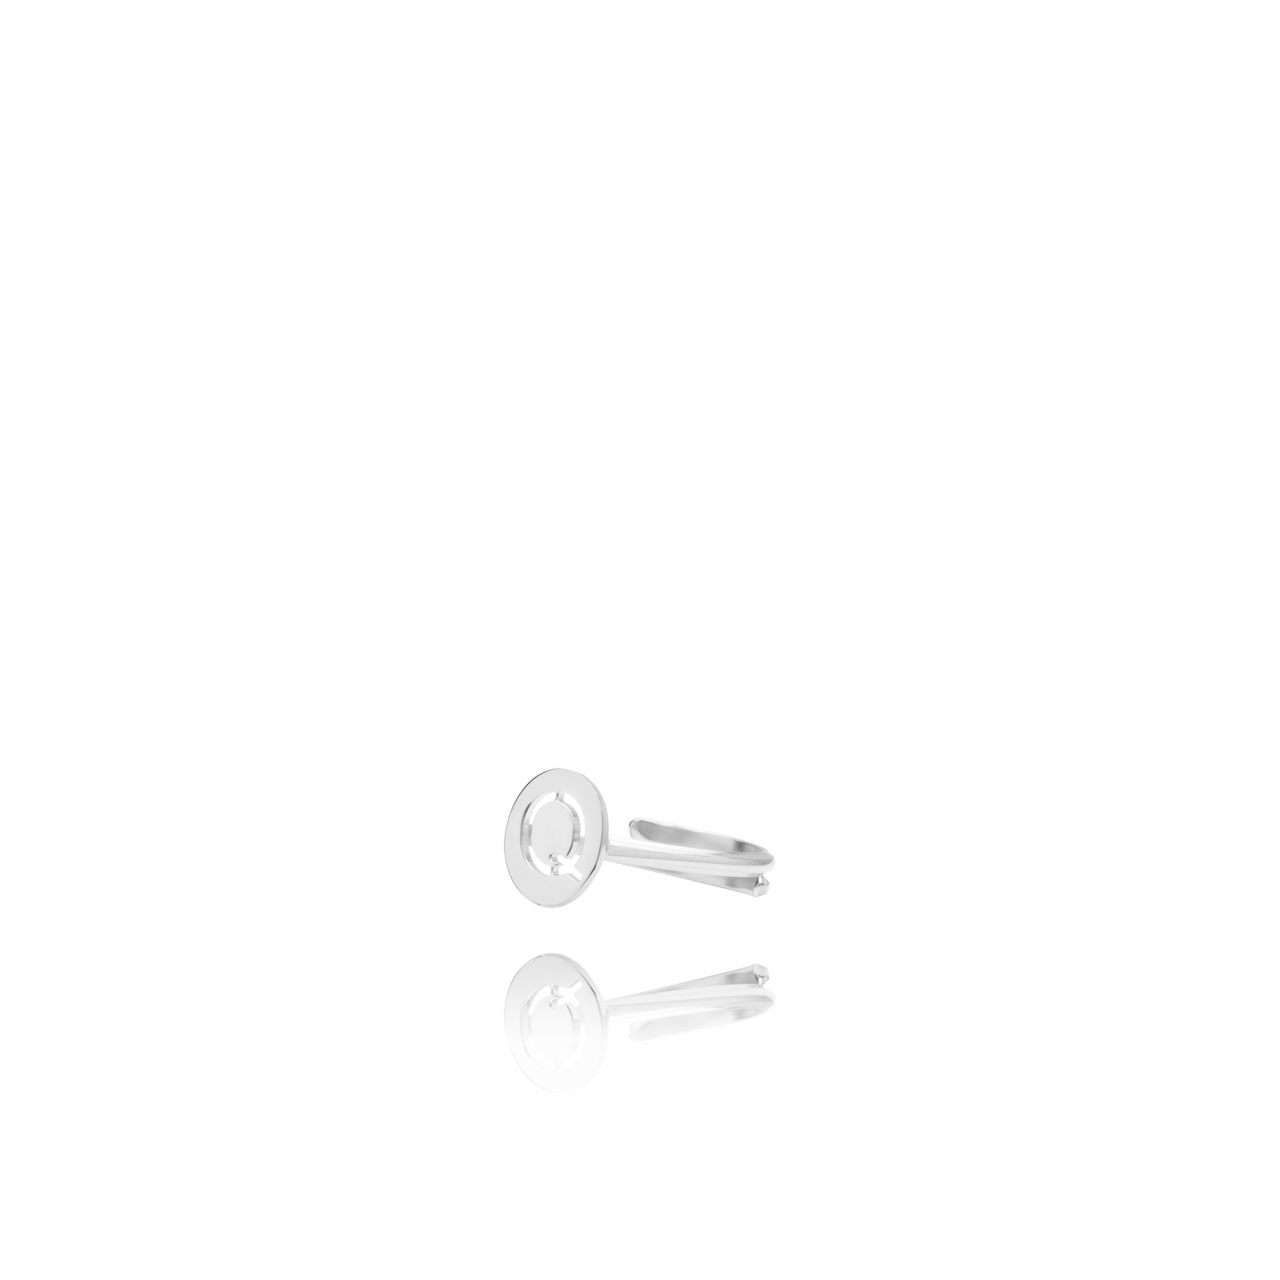 Zilveren ring Initial Smalllott-theme.productDescriptionPage.SEO.byTheBrand